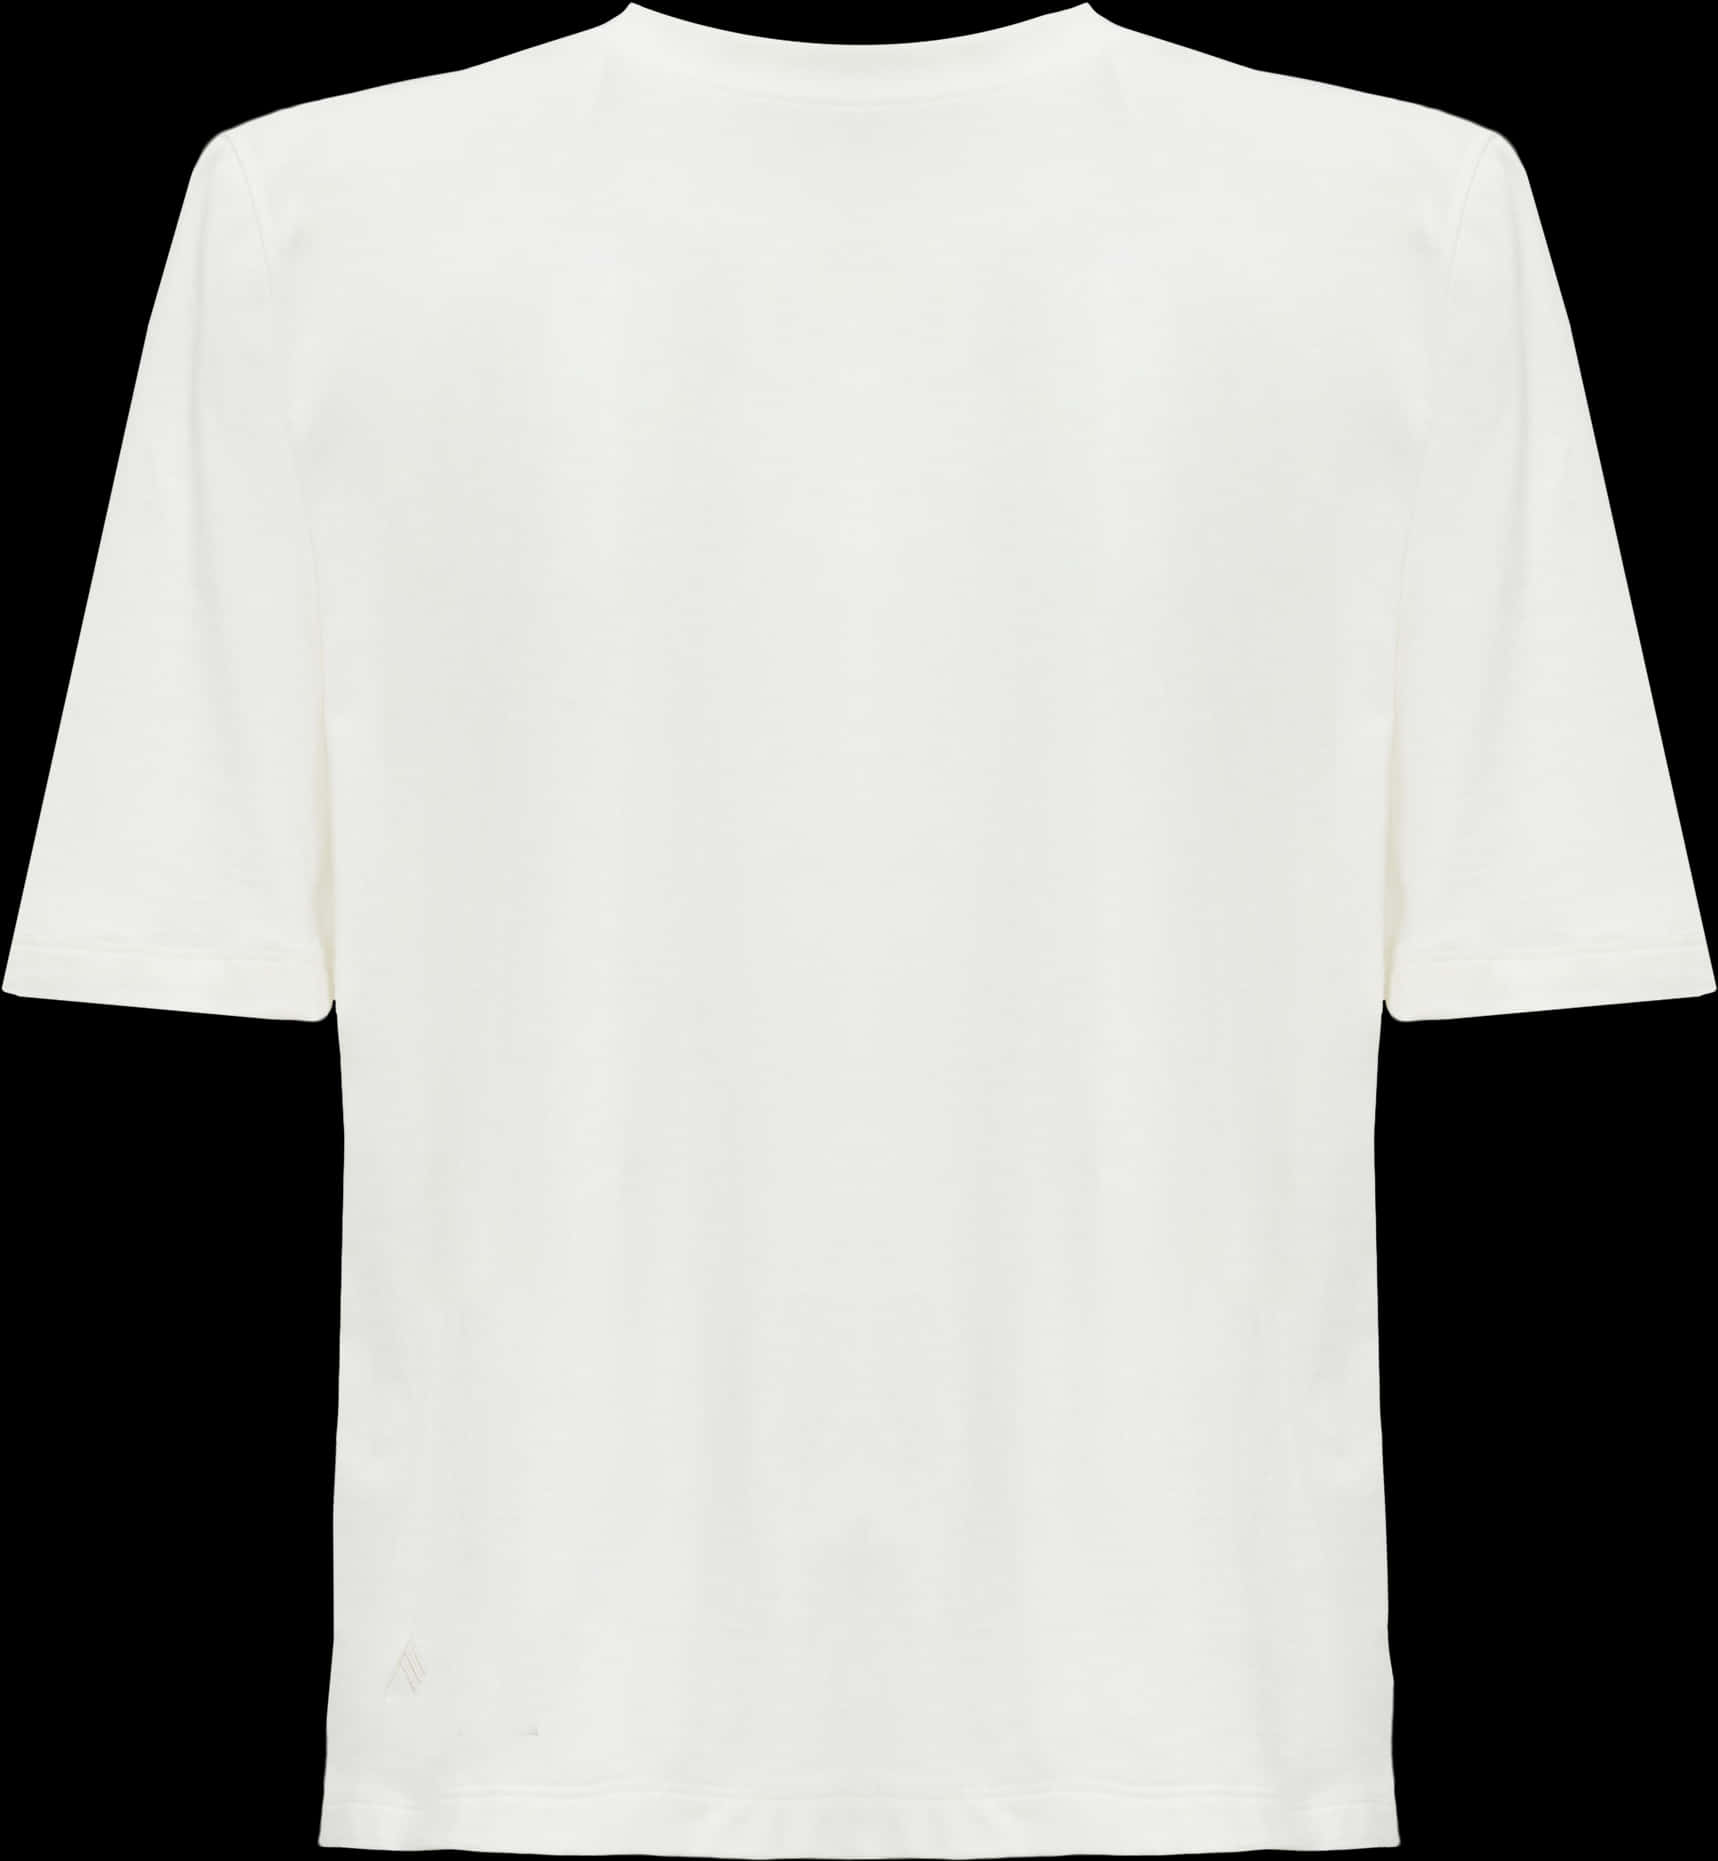 Plain White T Shirt Front View